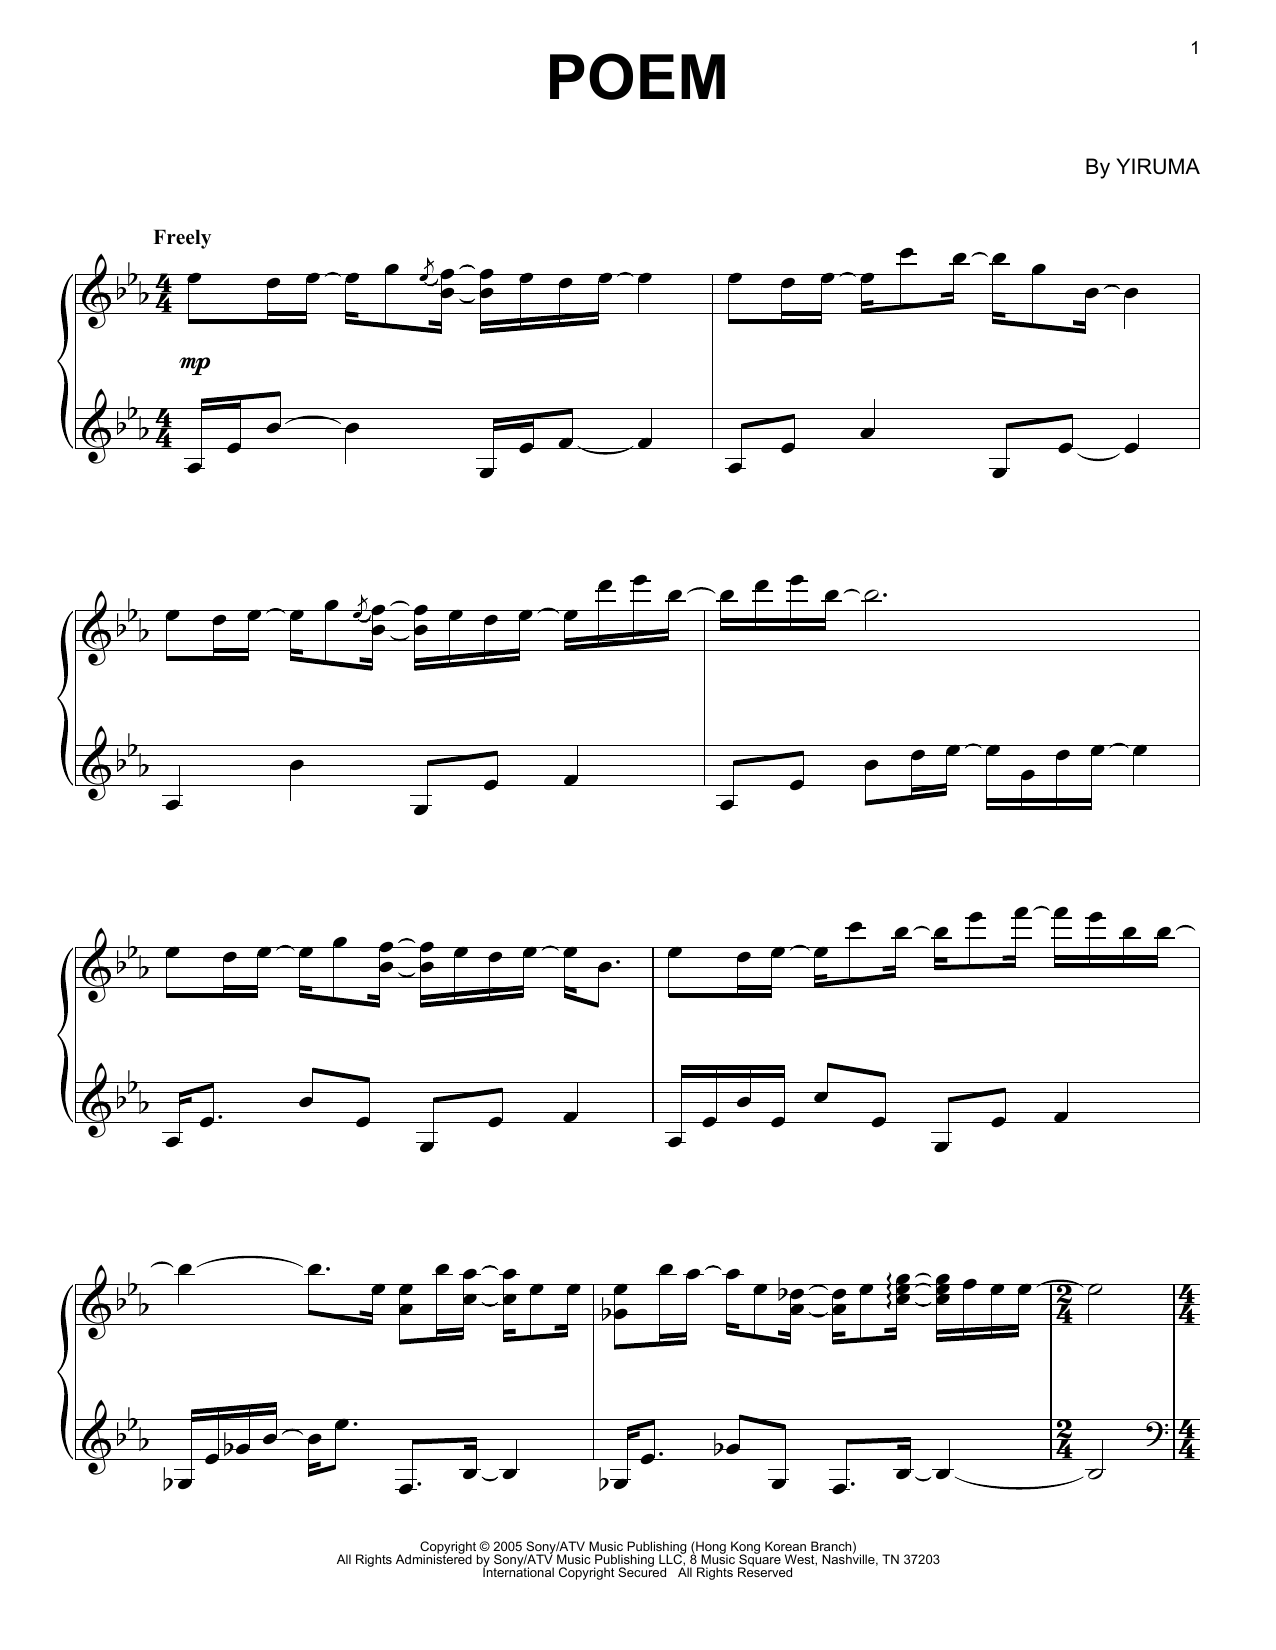 Yiruma Poem Sheet Music Notes & Chords for Piano - Download or Print PDF